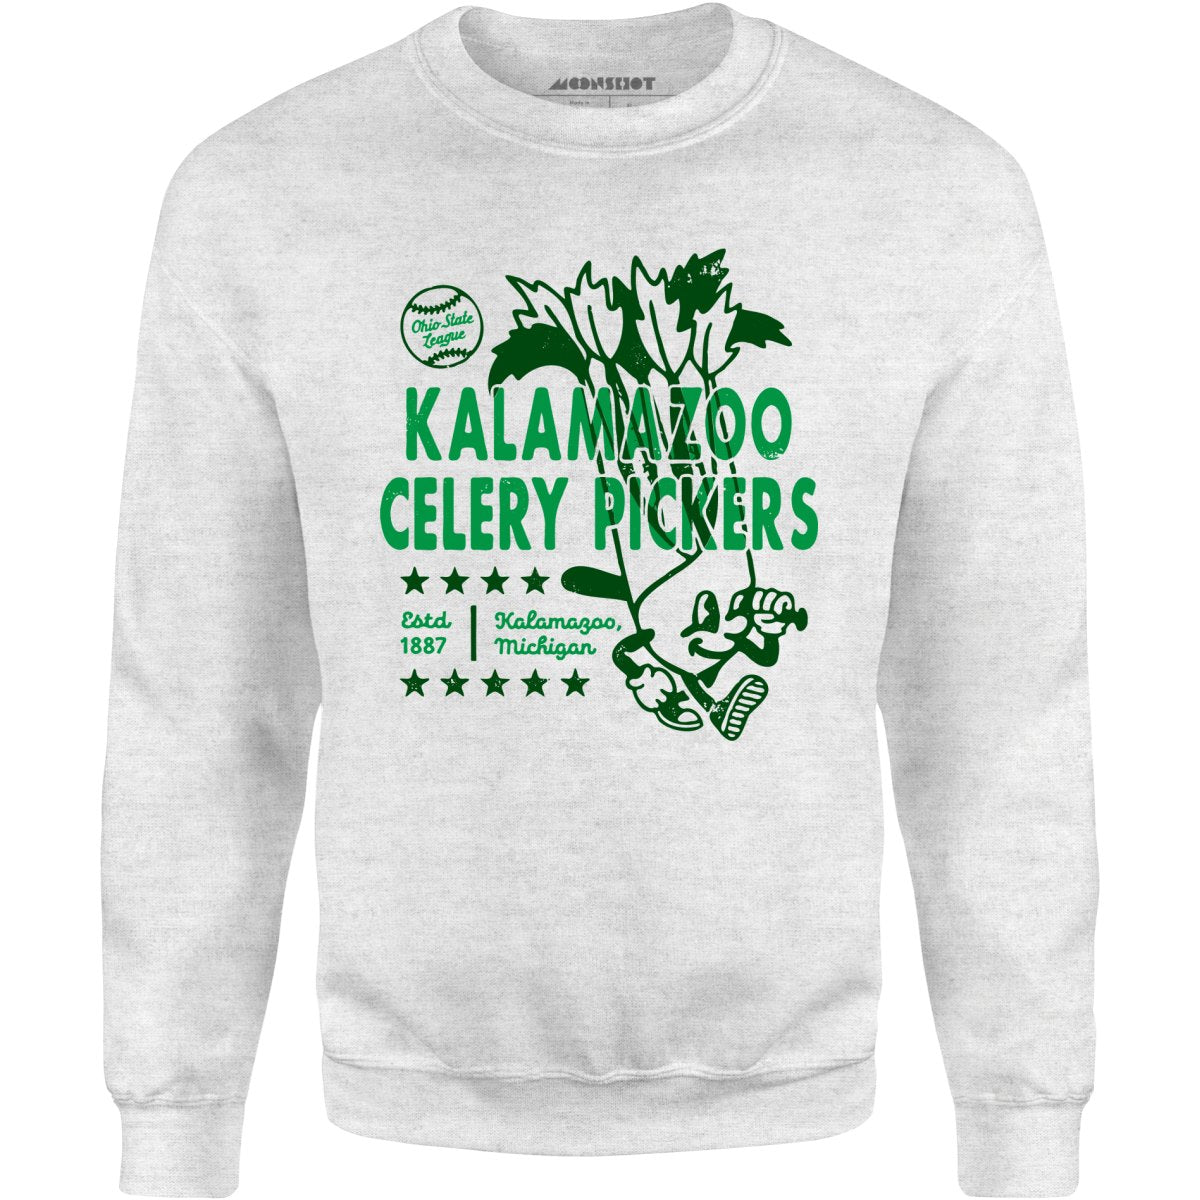 Kalamazoo Celery Pickers - Michigan - Vintage Defunct Baseball Teams - Unisex Sweatshirt